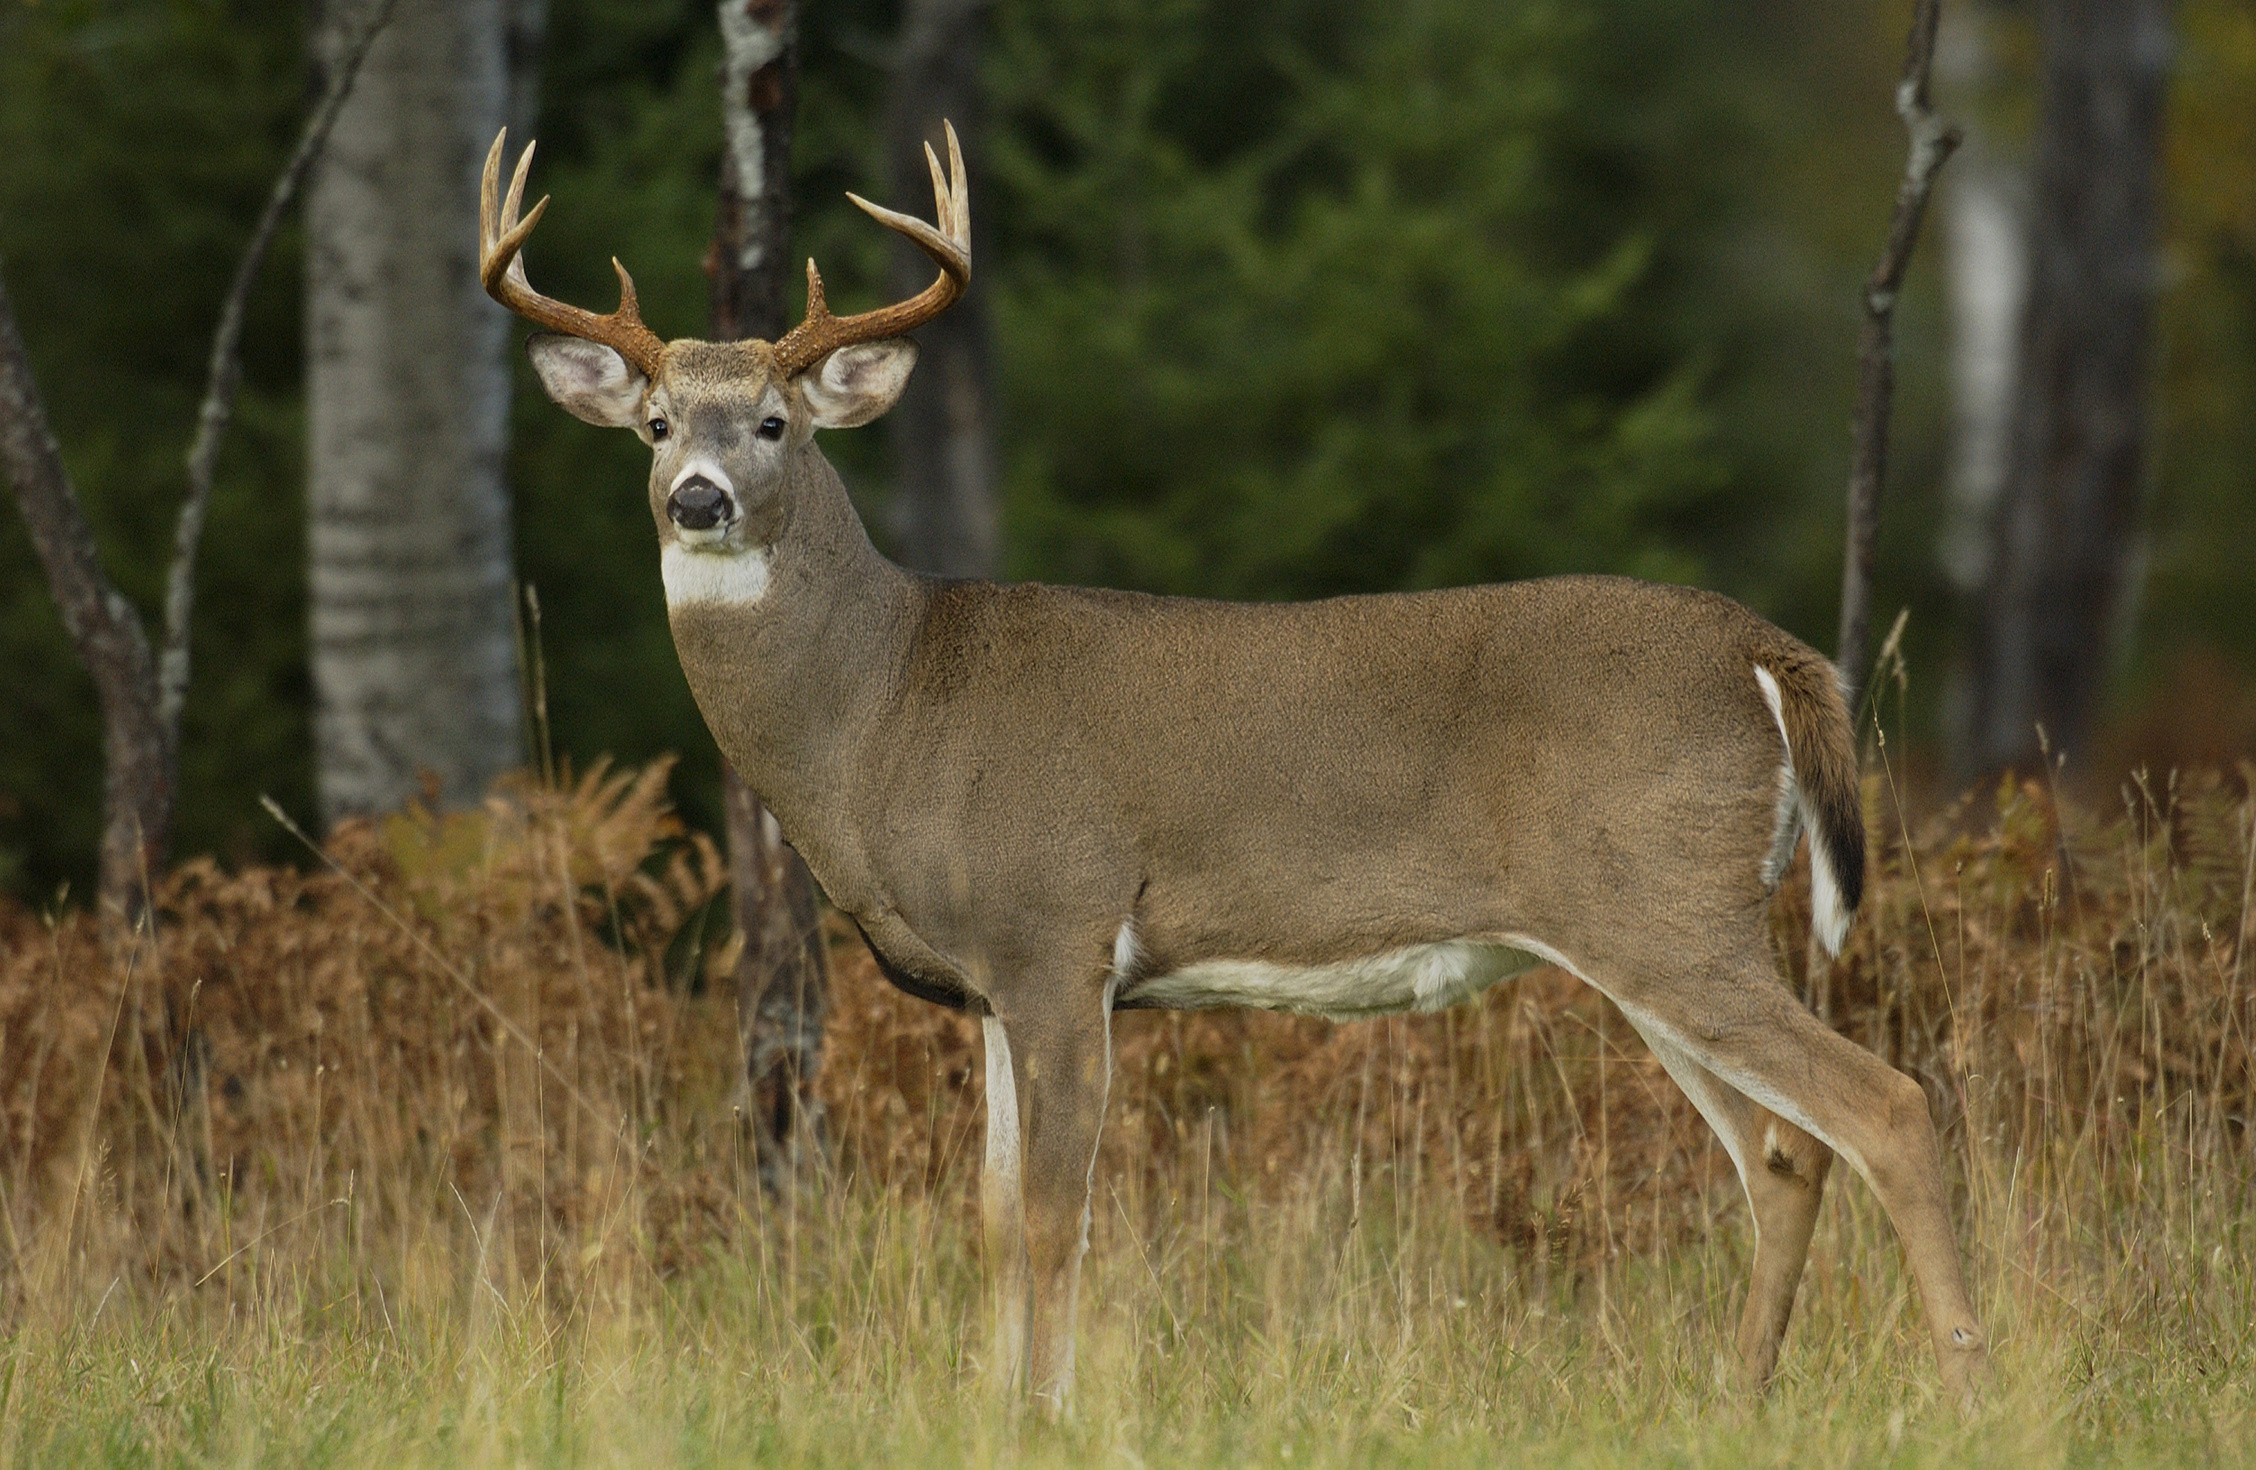 Southfield deer, Edible materials guidelines, Safety measures, Responsible feeding, 2260x1470 HD Desktop